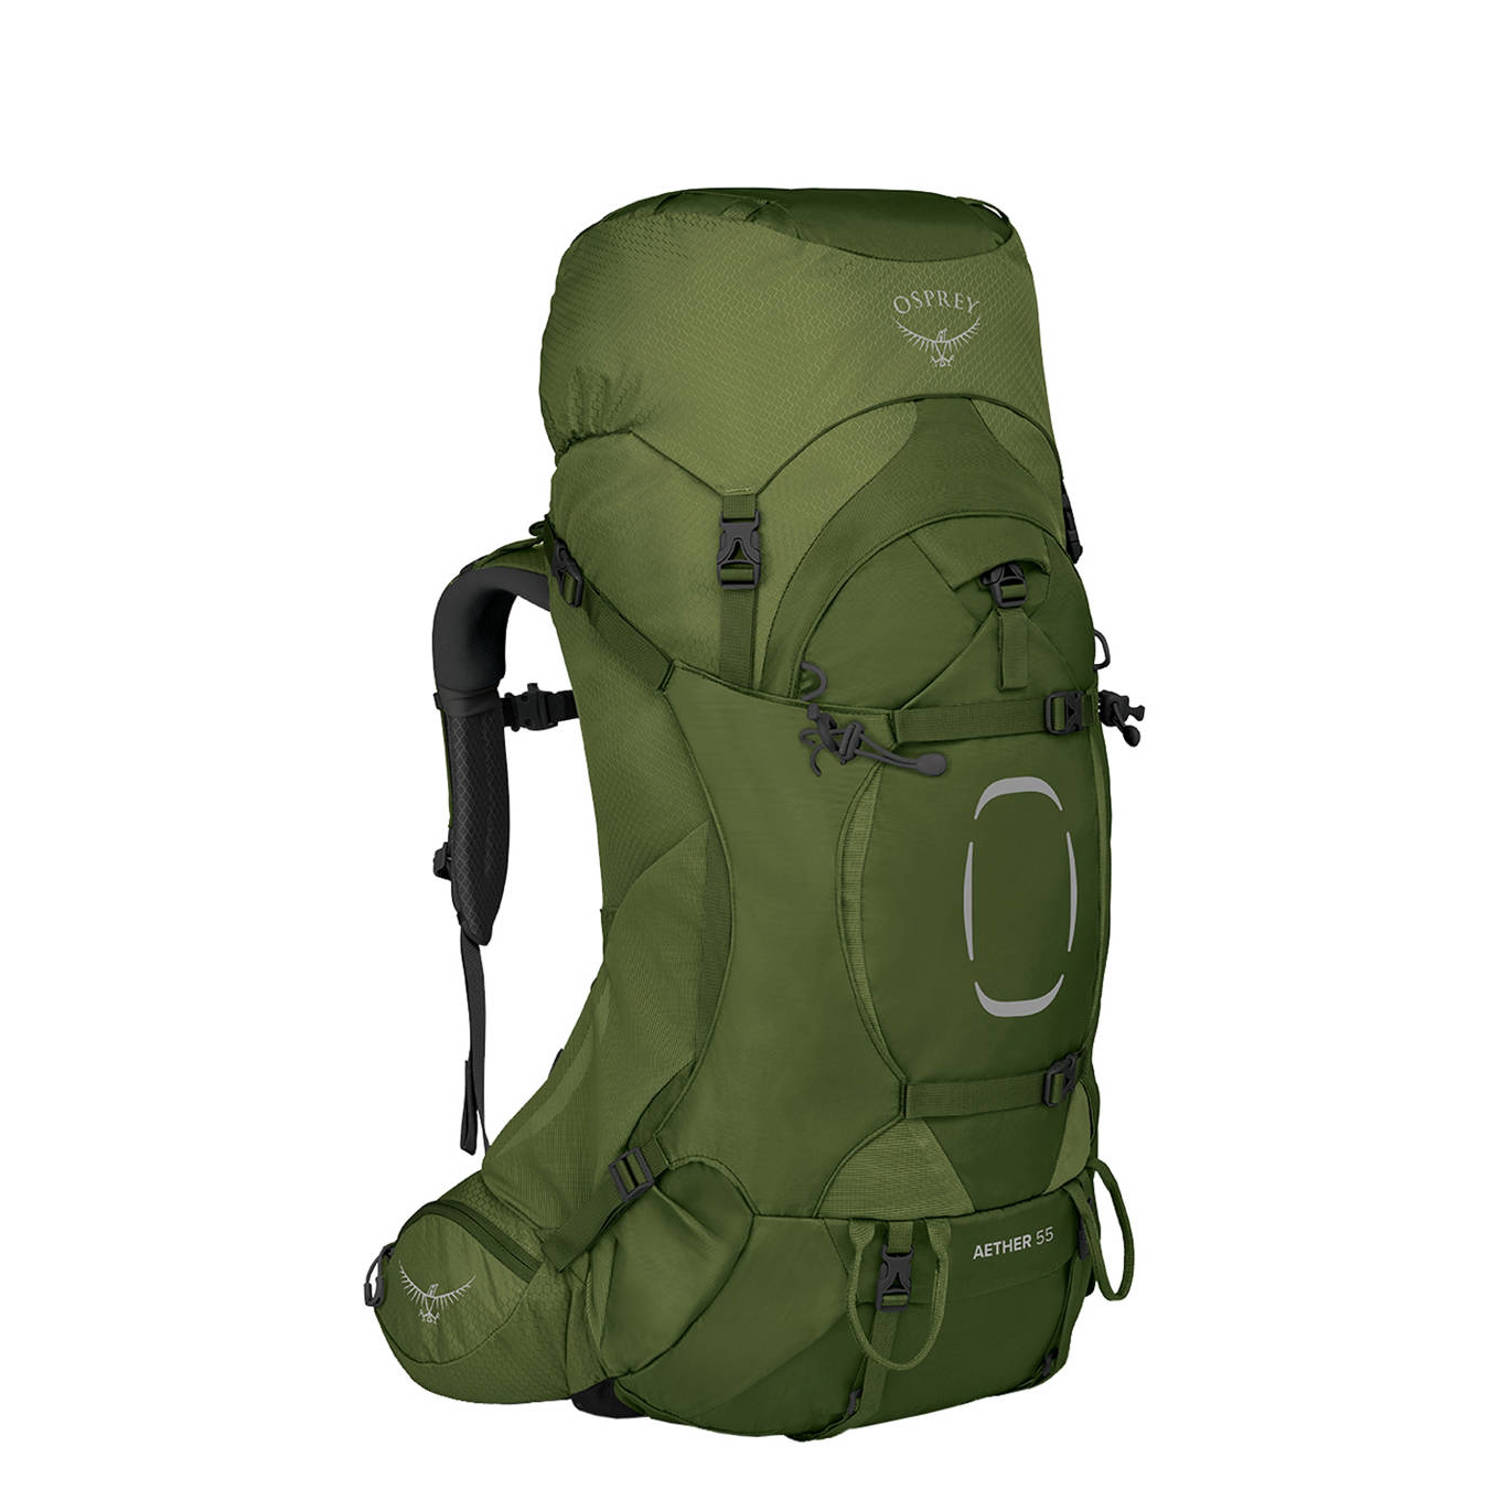 Osprey backpack Aether 55 L XL groen